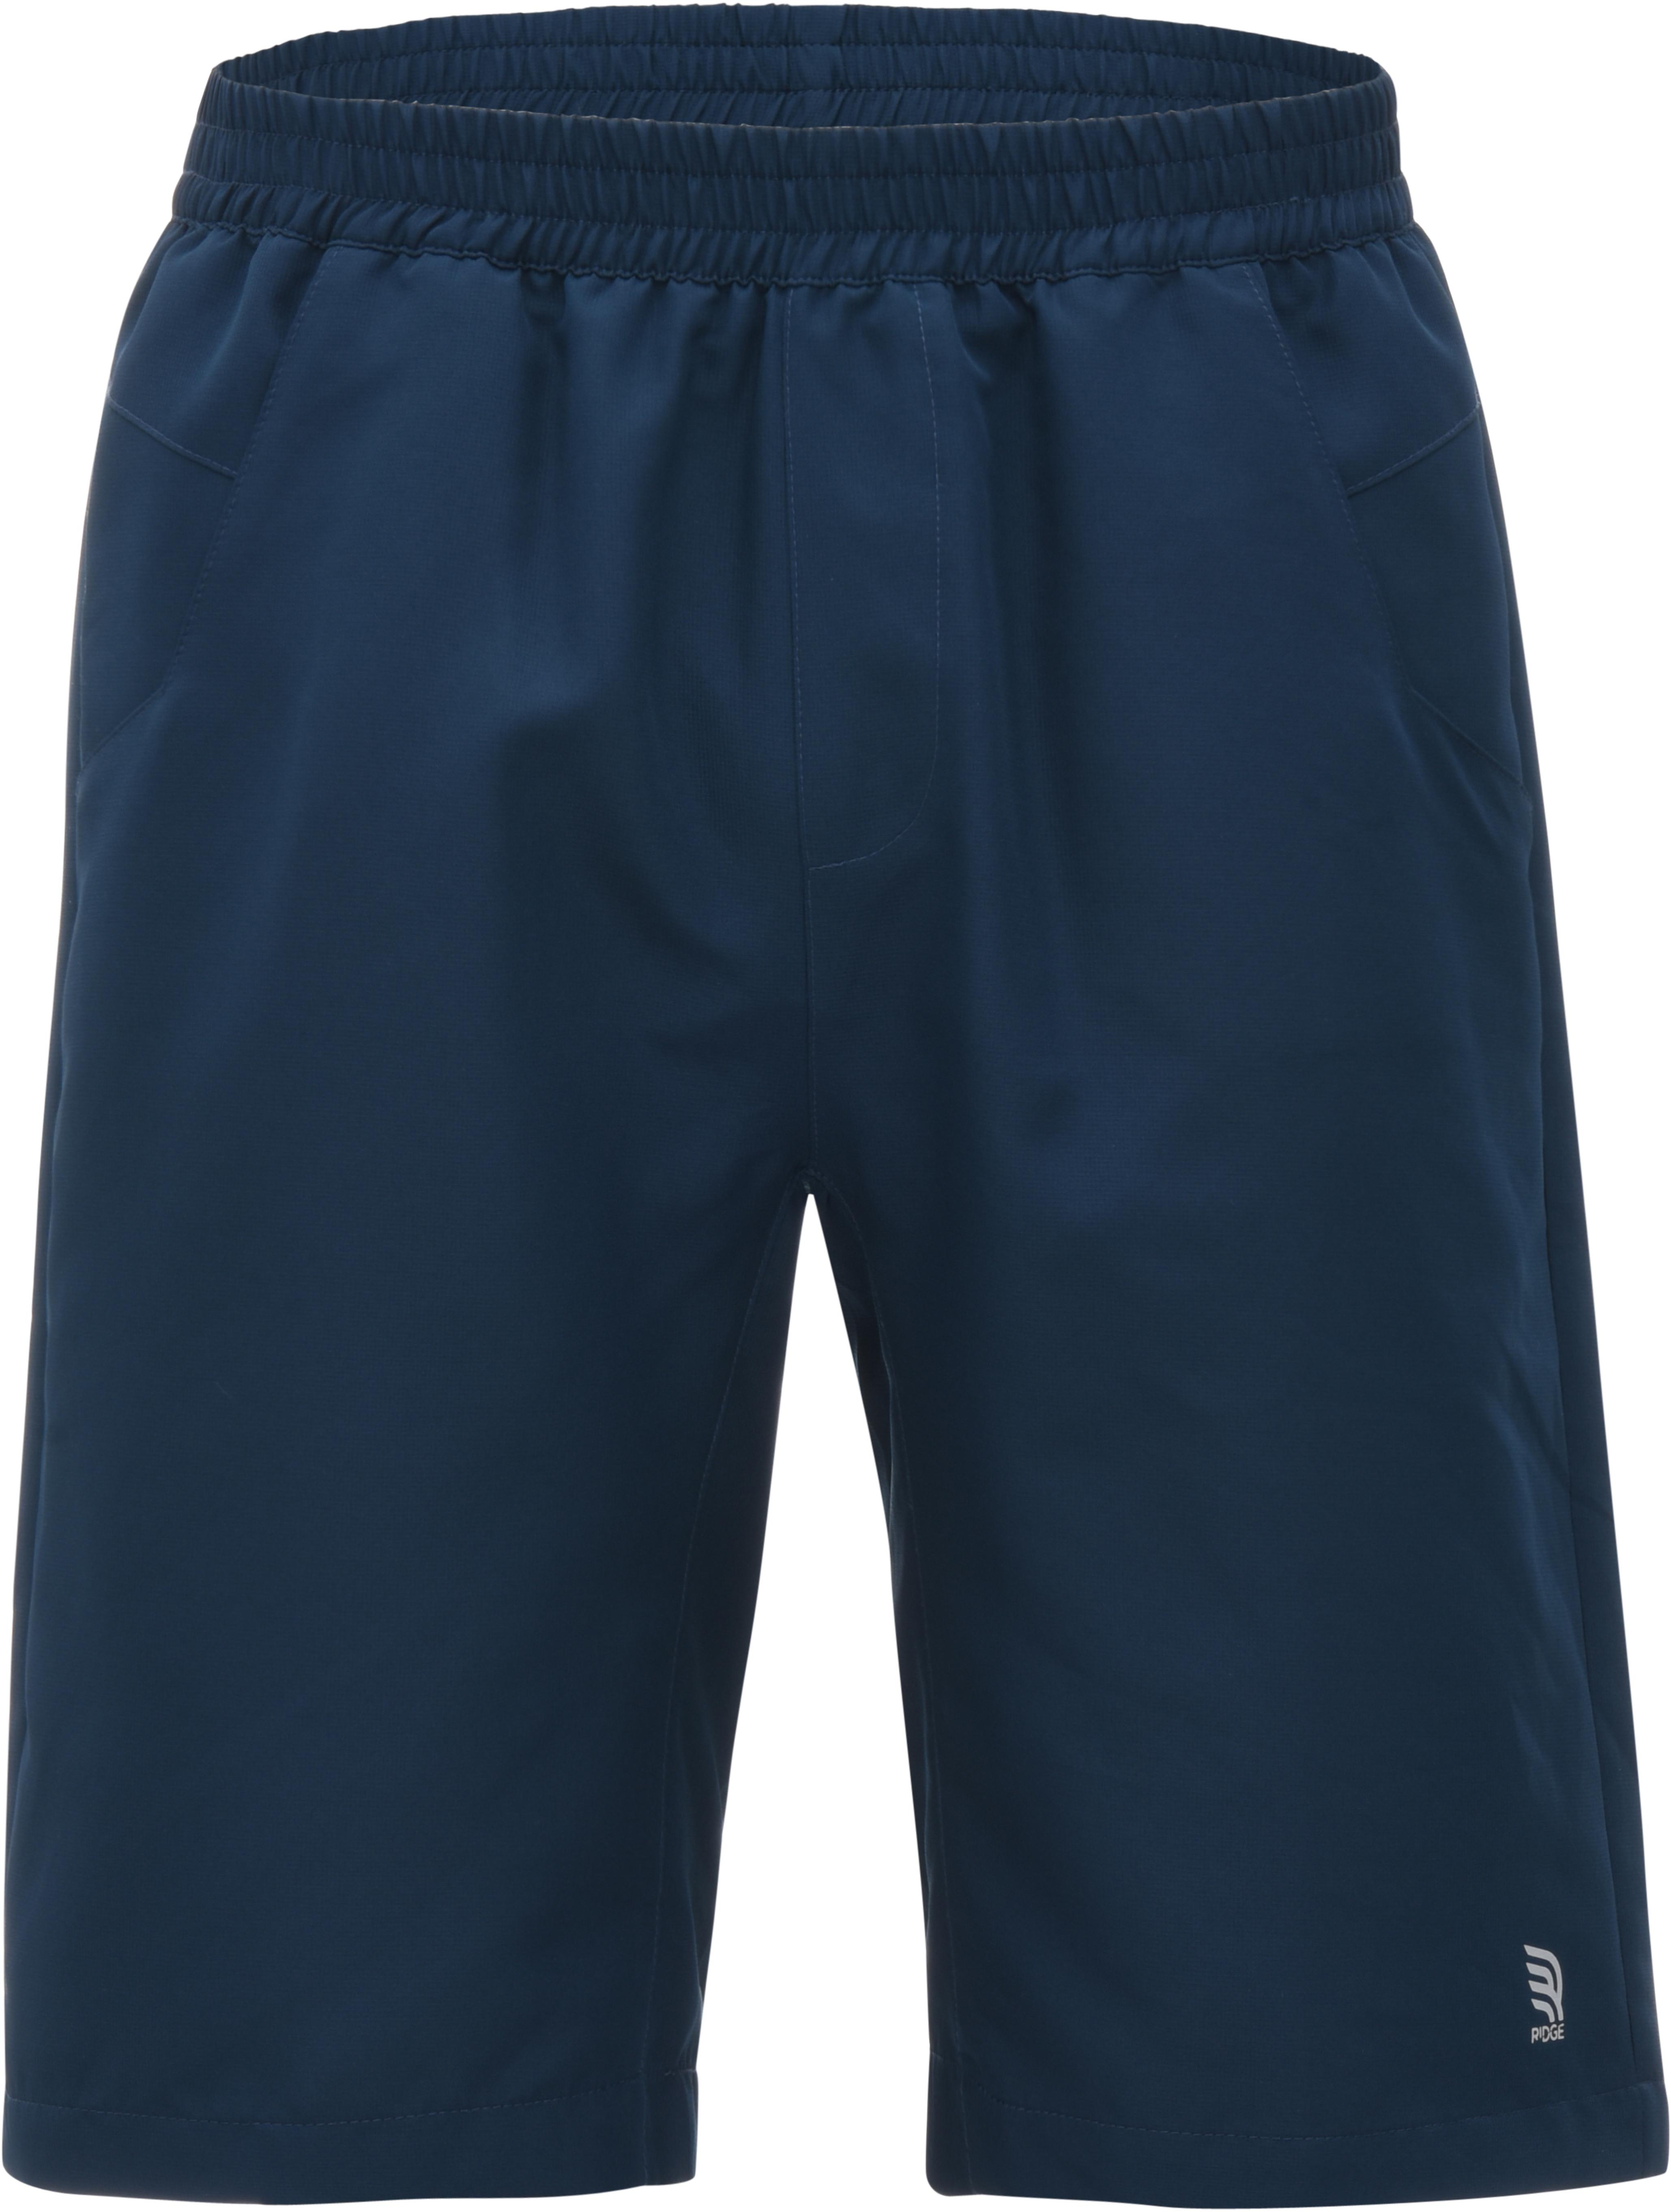 Ridge Mens Casual Shorts, X Large